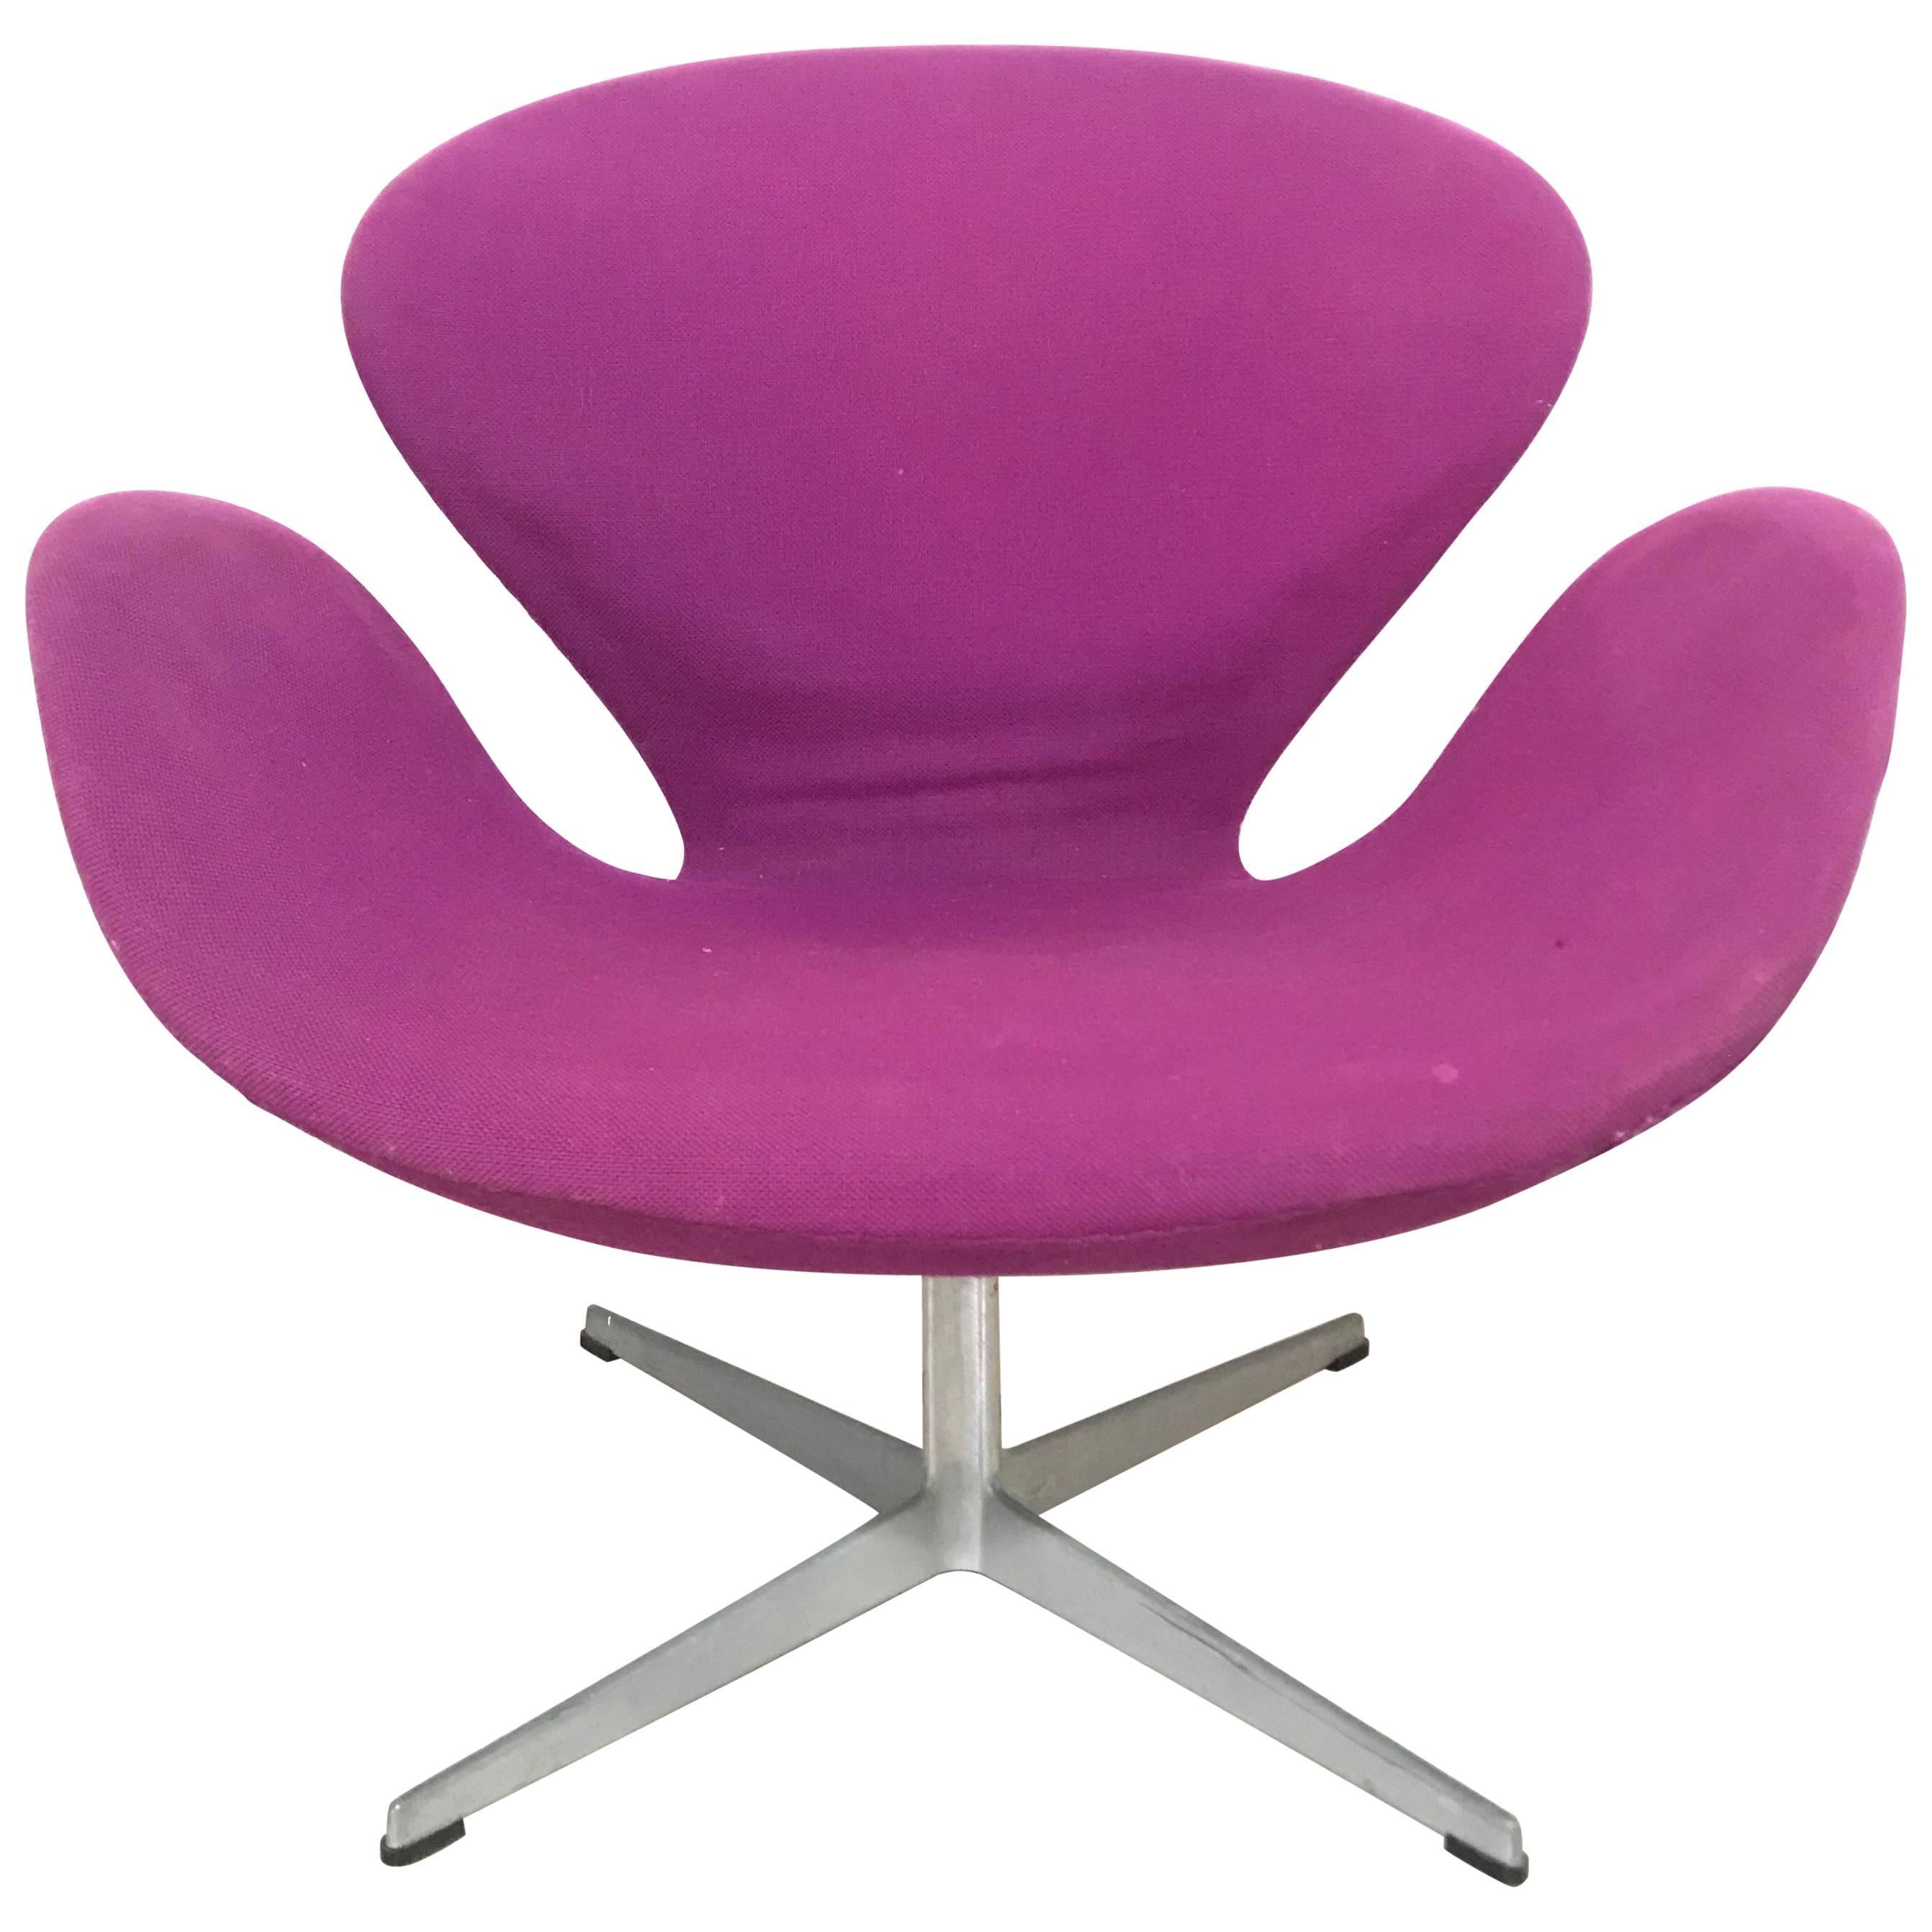 Original Arne Jacobsen “Swan” Chair No. 7105 for Fritz Hansen